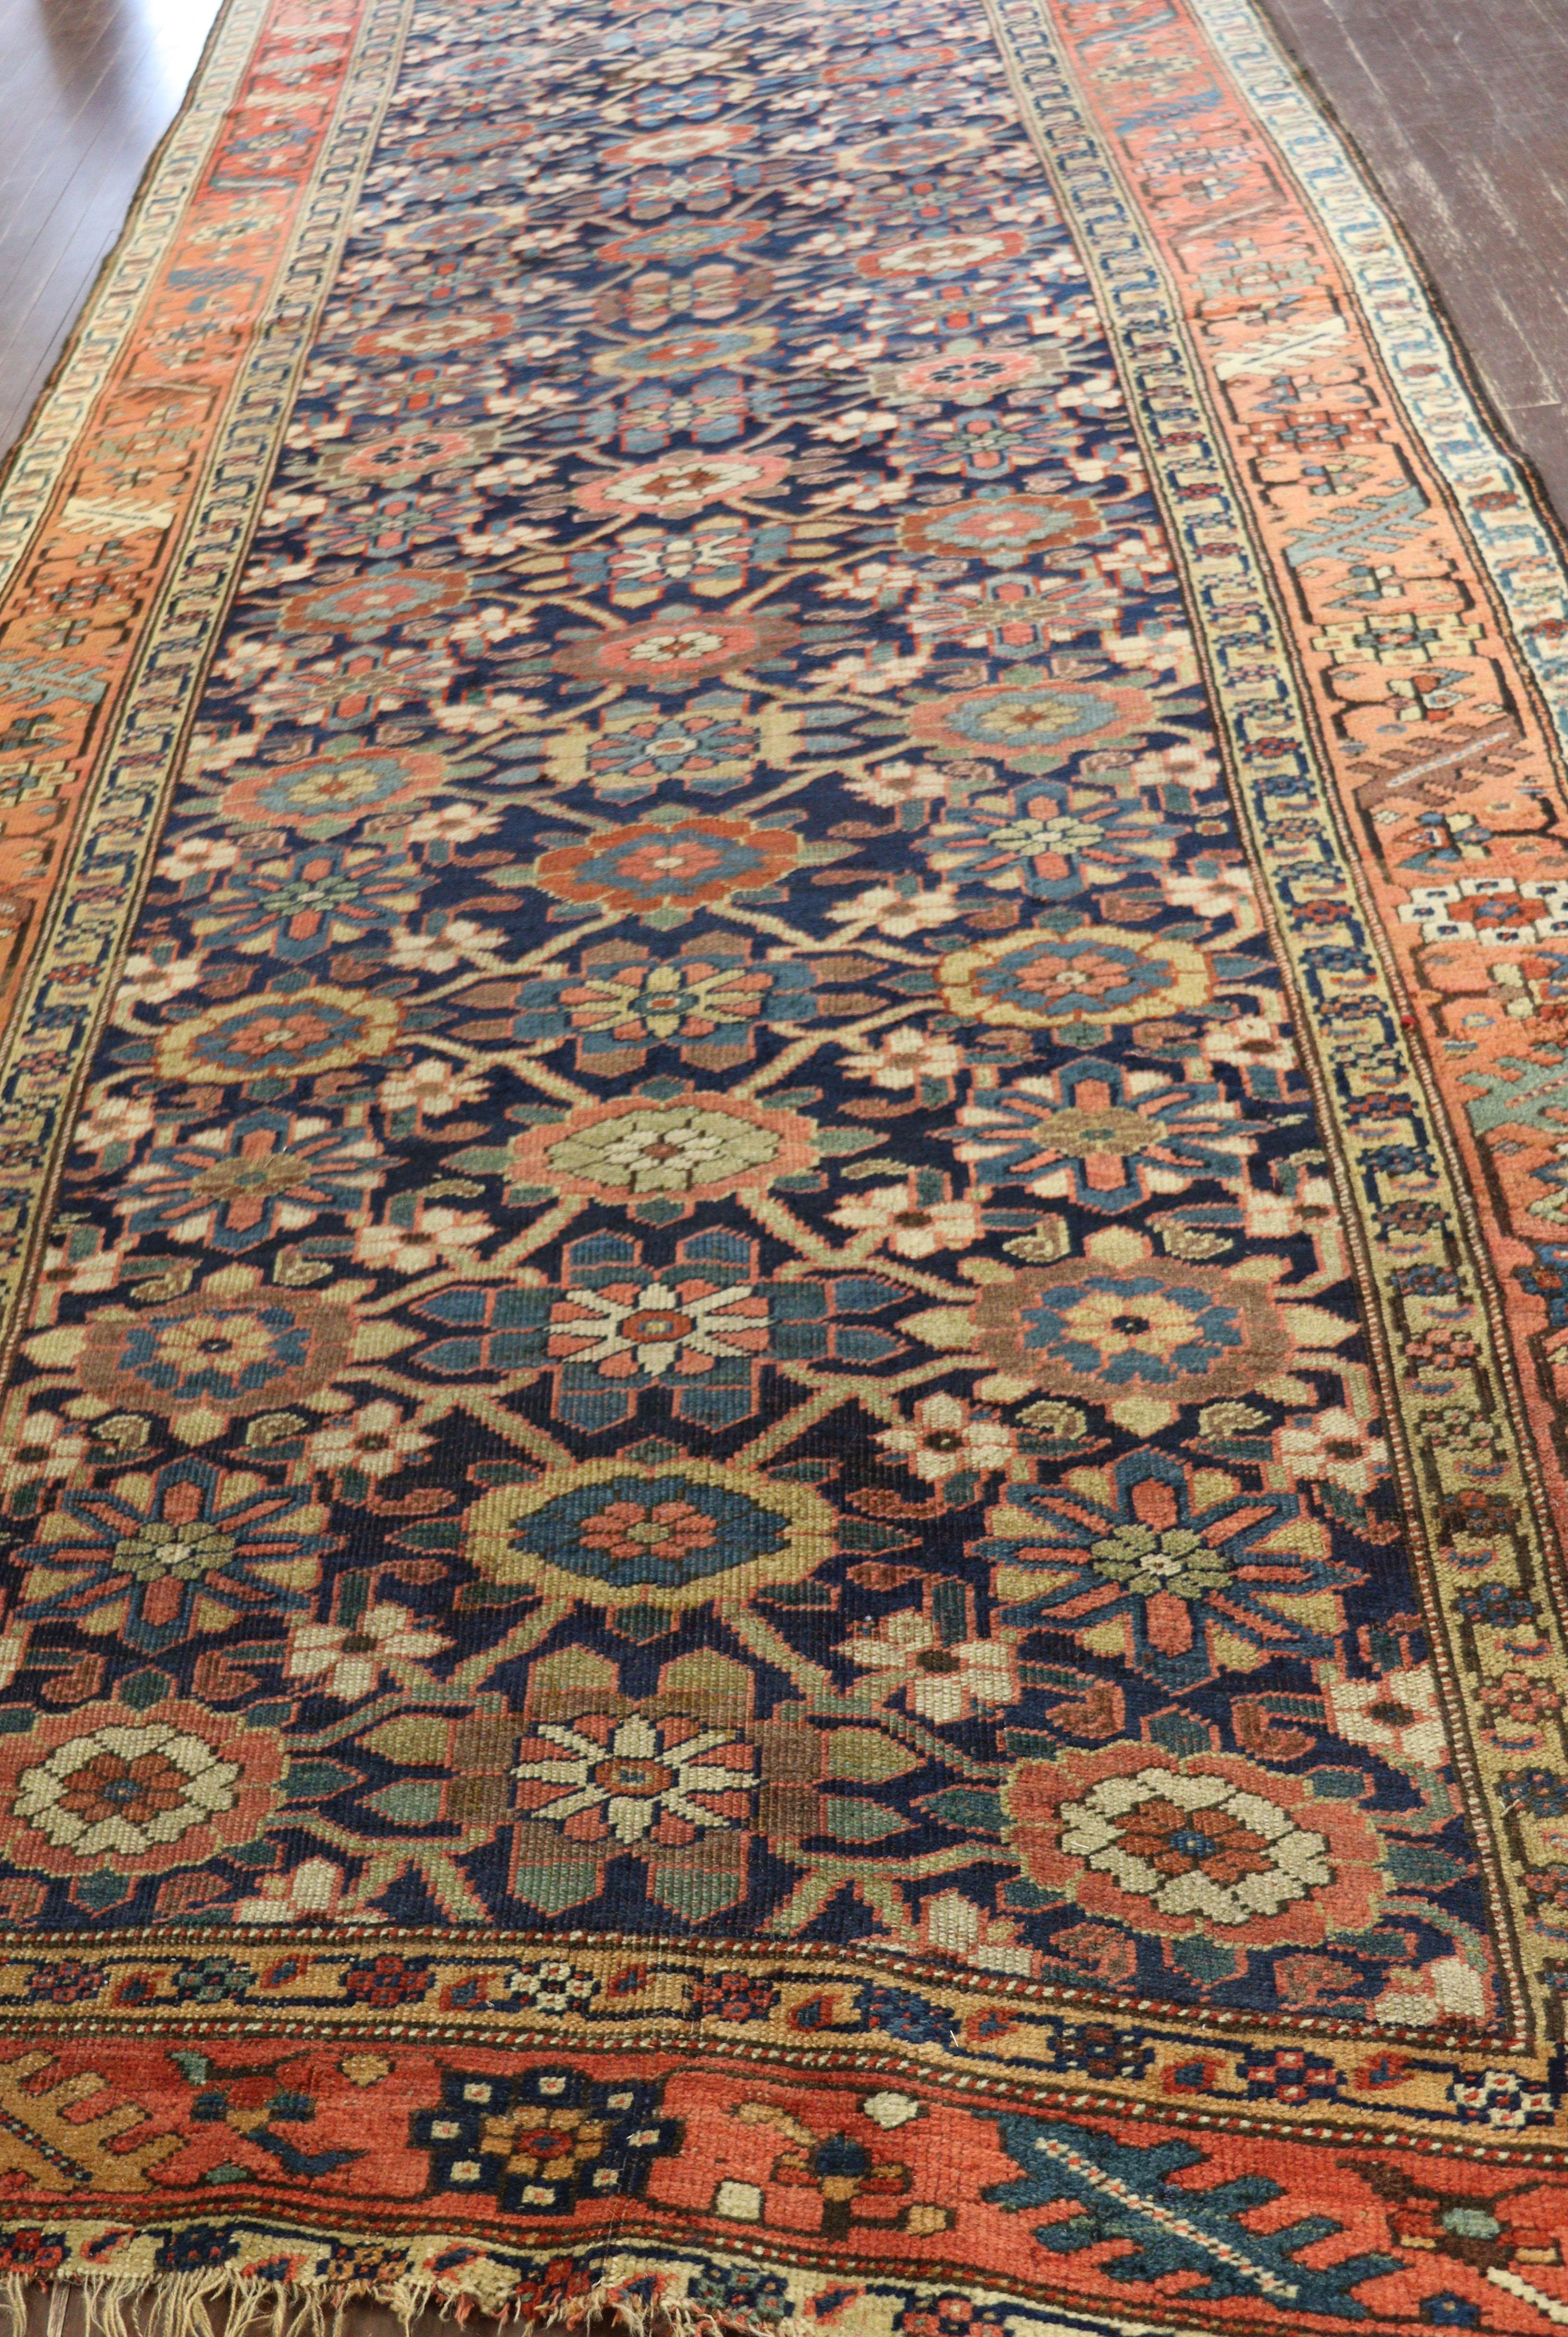 Antique Persian Tribal Bijar Halwai hand woven Gallery carpet 5' x 15'3